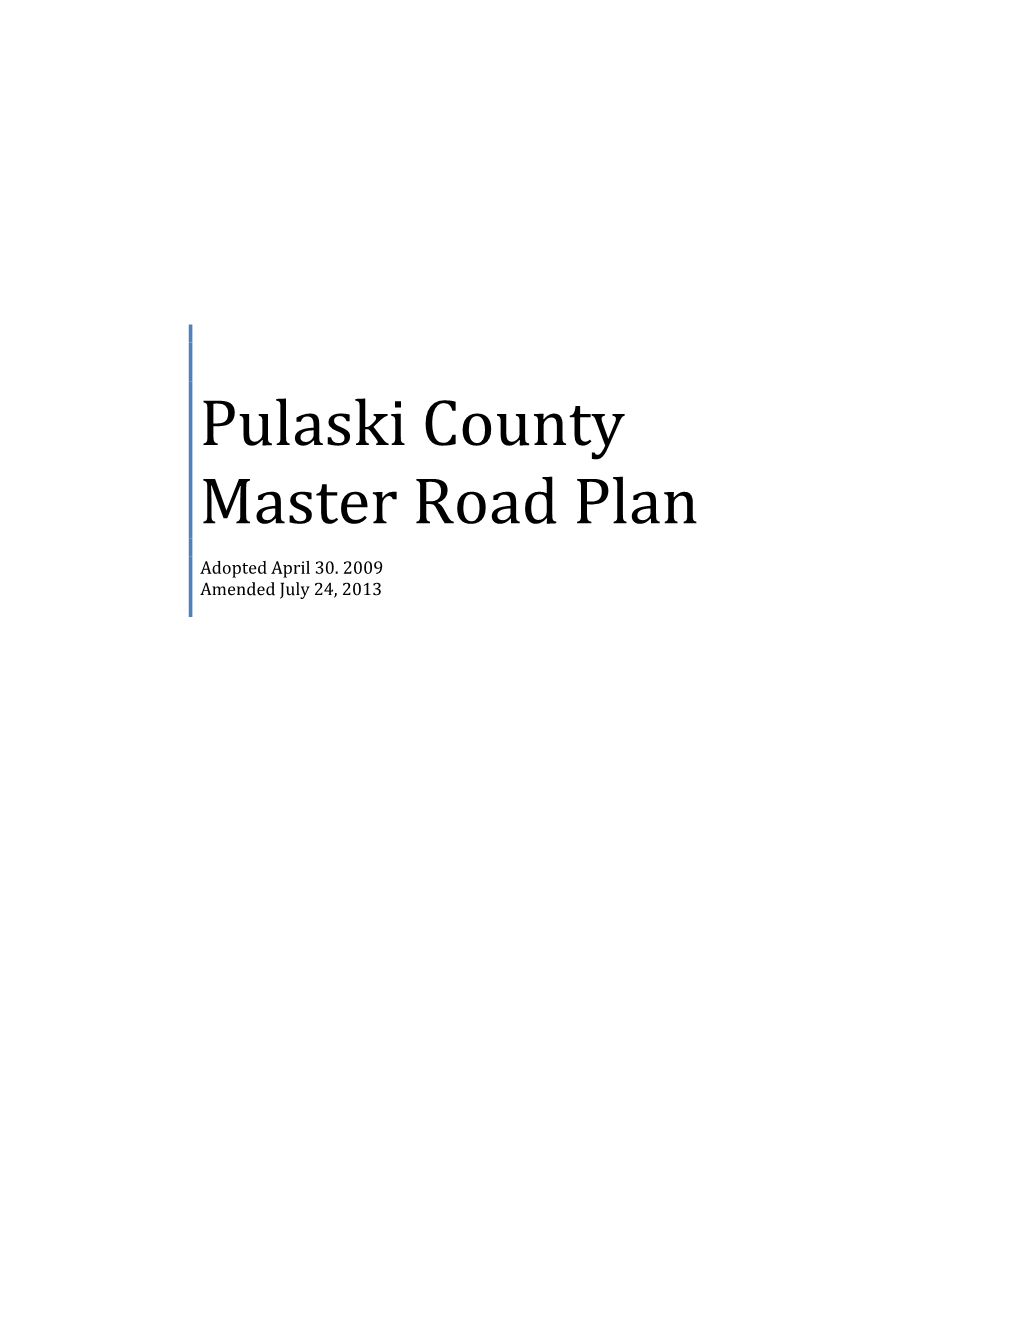 Pulaski County Master Road Plan